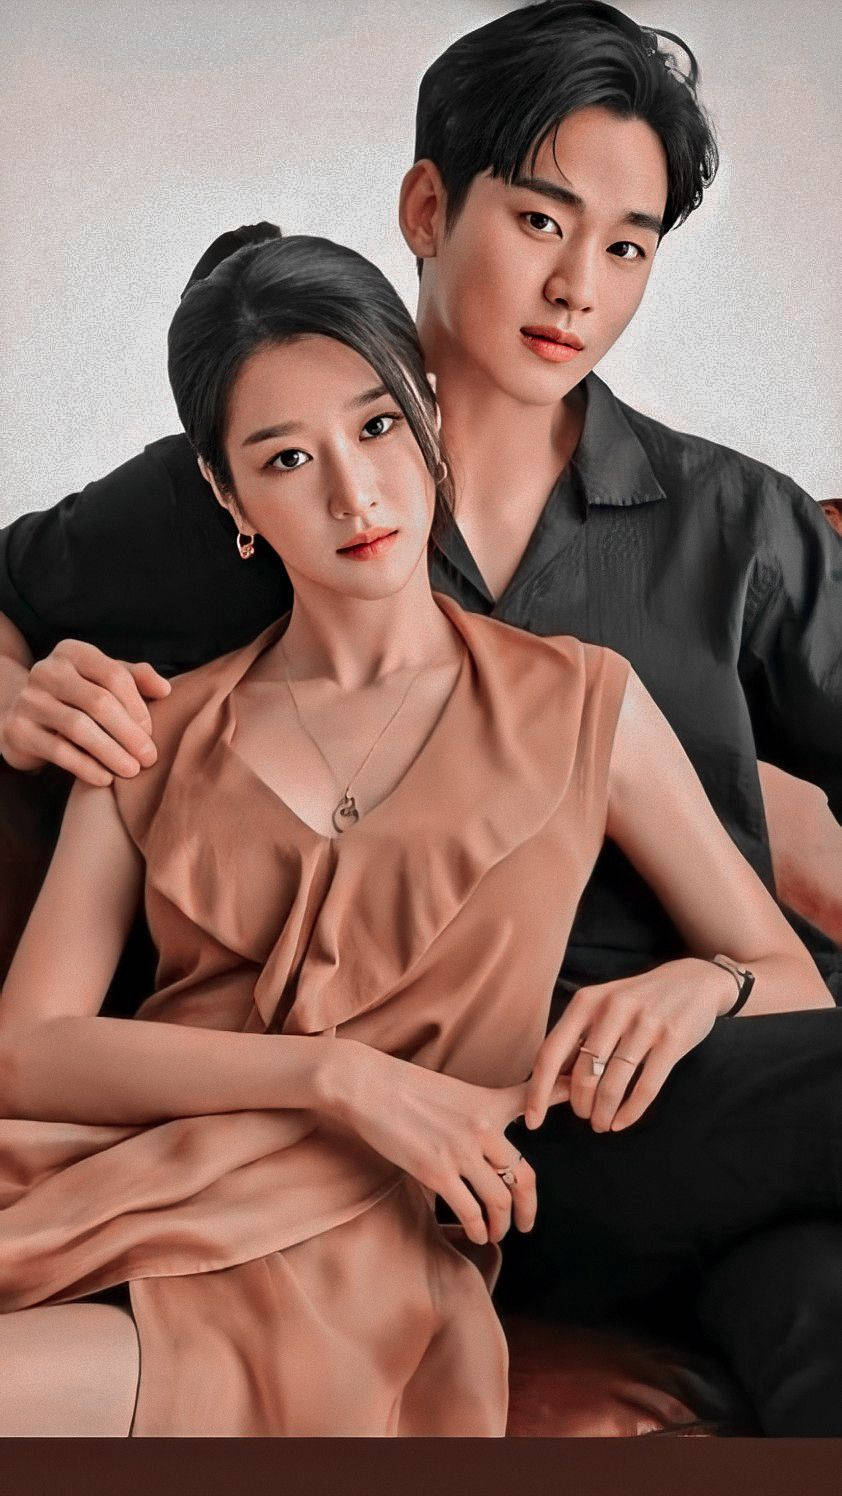 Korean Couple From A Drama Series Wallpaper